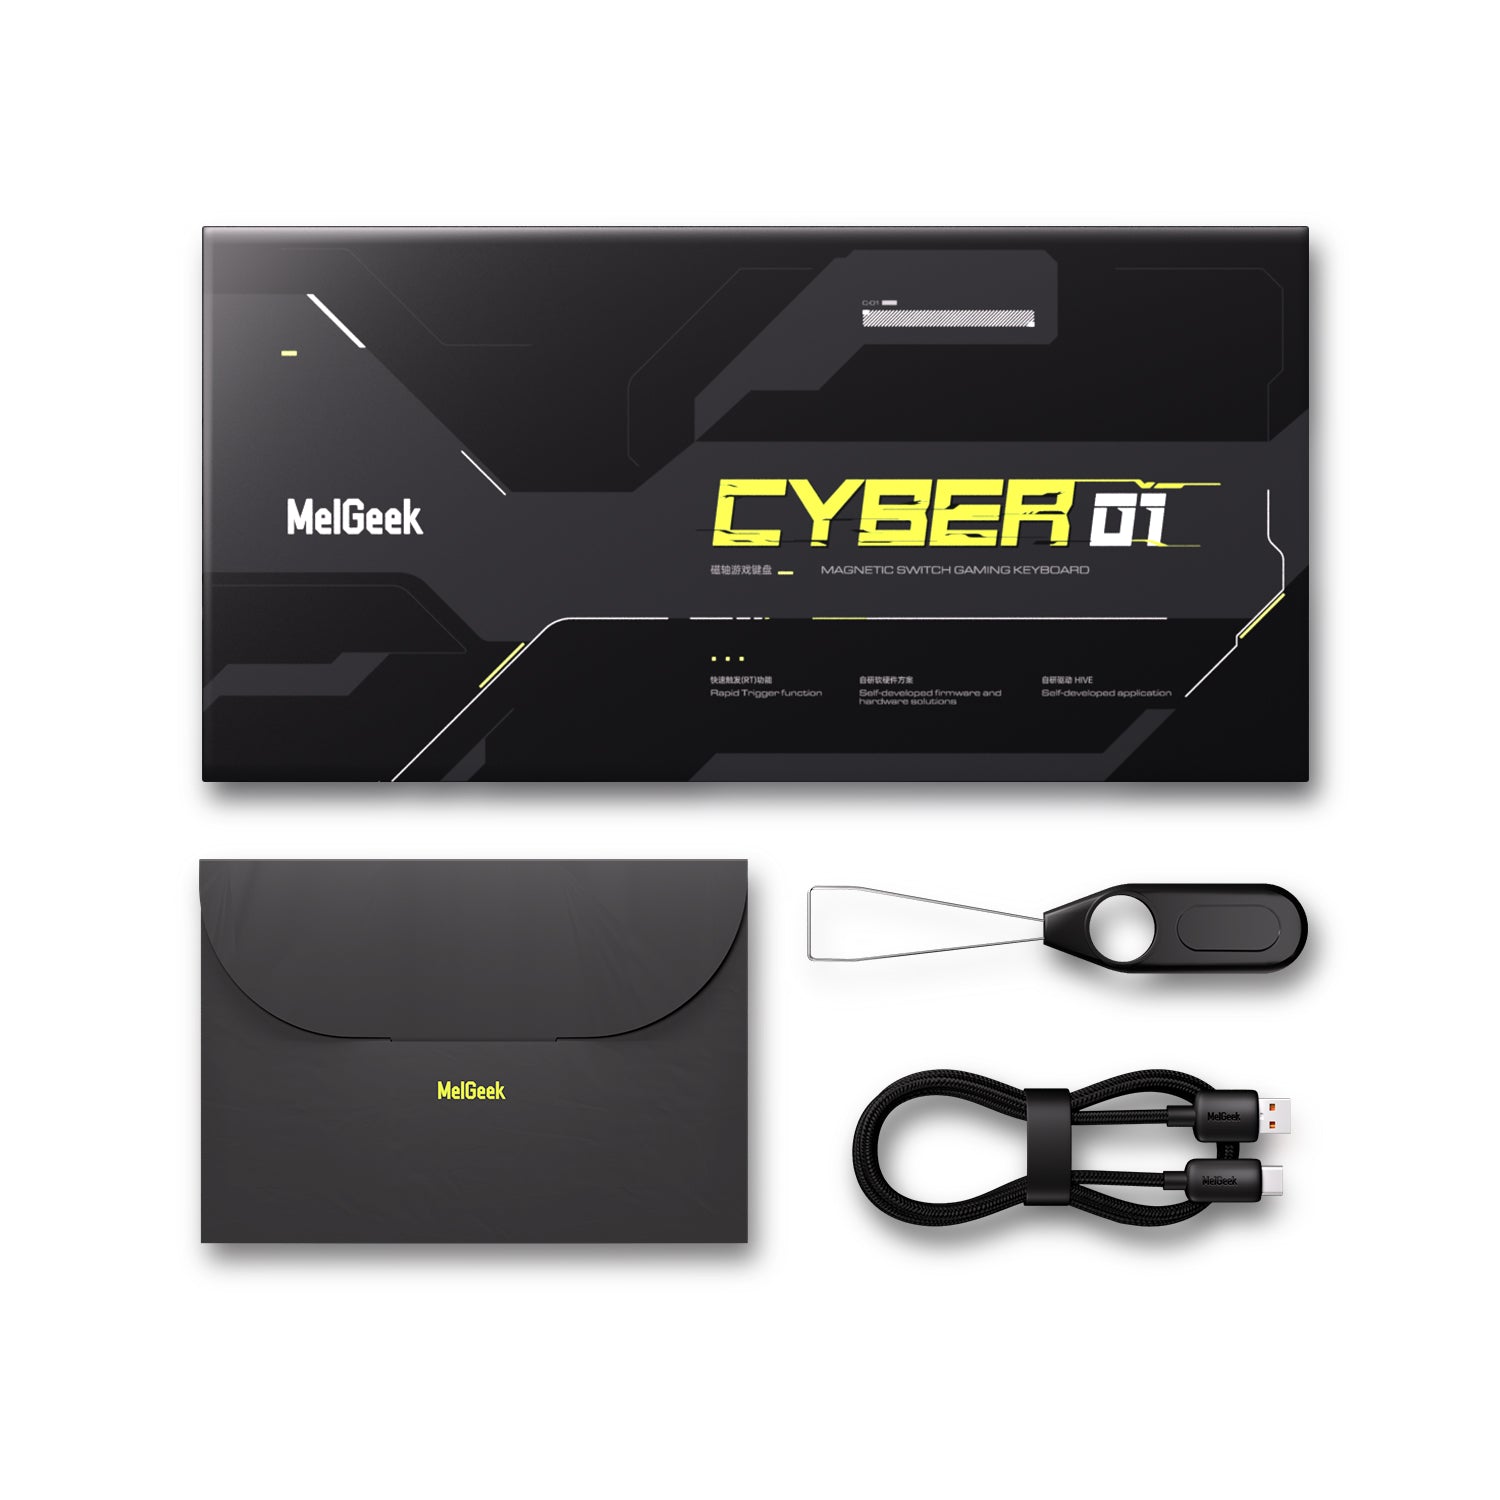 MelGeek Cyber01 Magnetic Switch Gaming Keyboard